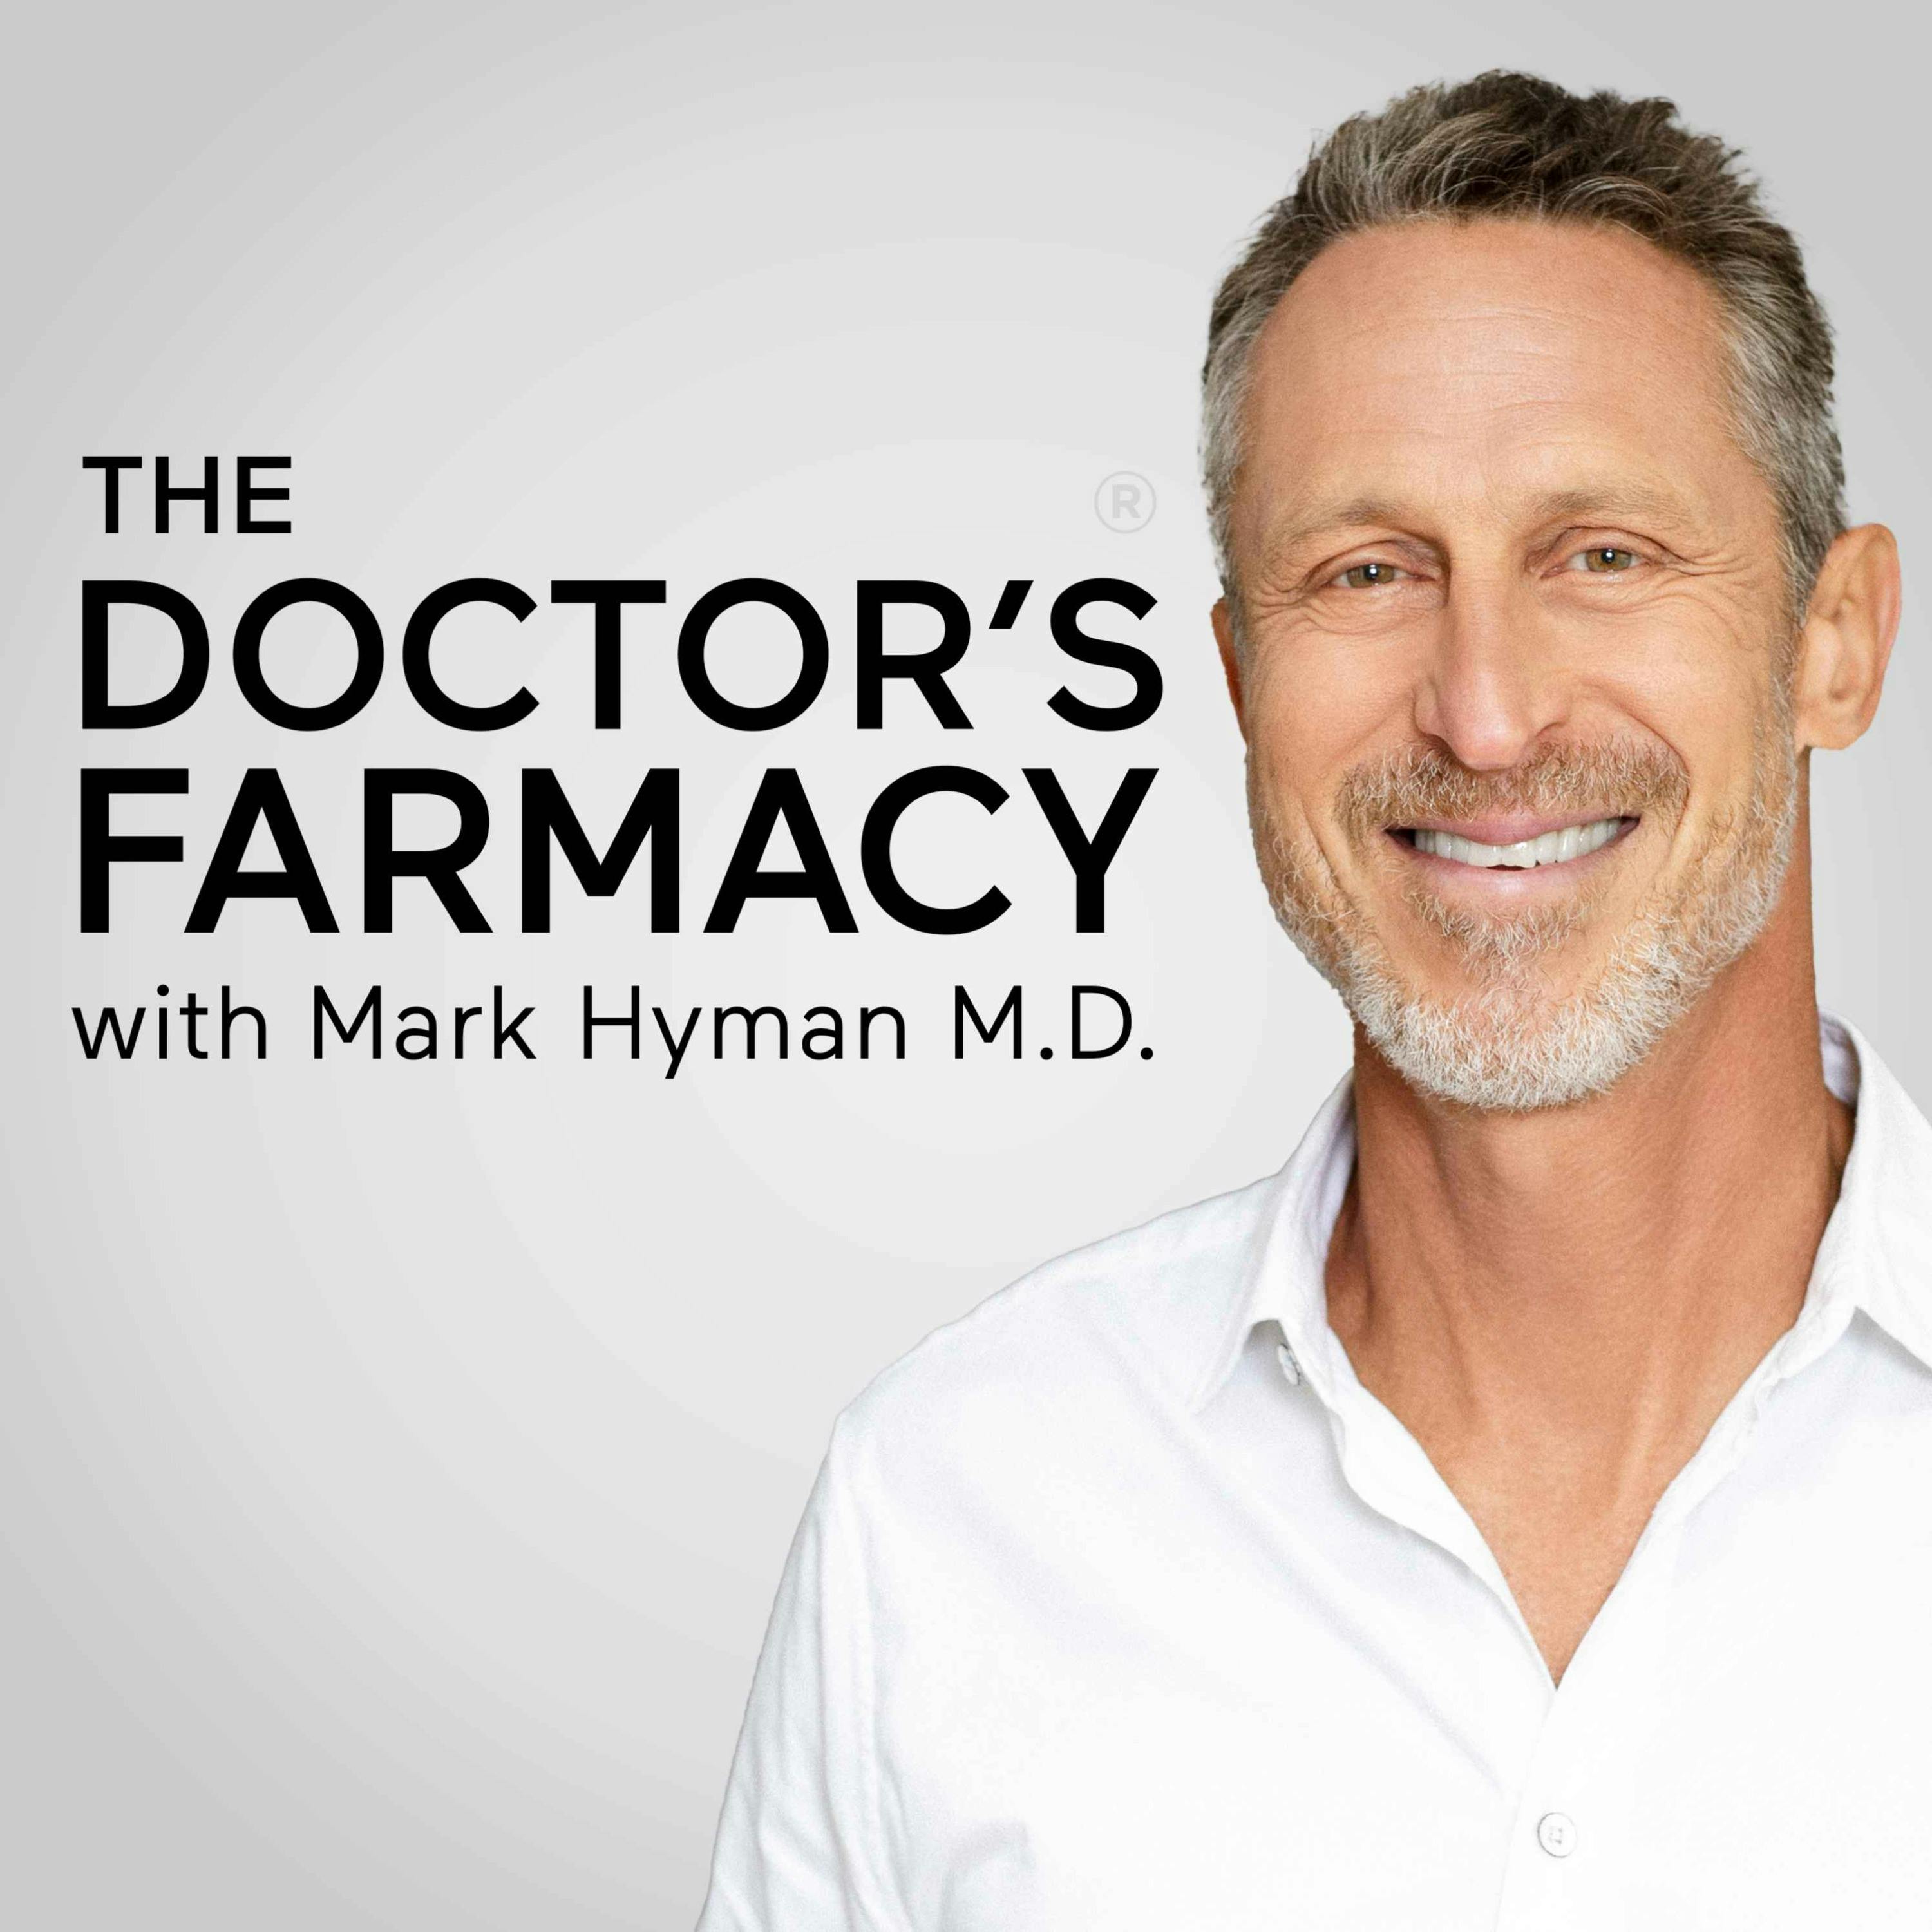 The Doctor's Farmacy with Mark Hyman, M.D. by Dr. Mark Hyman